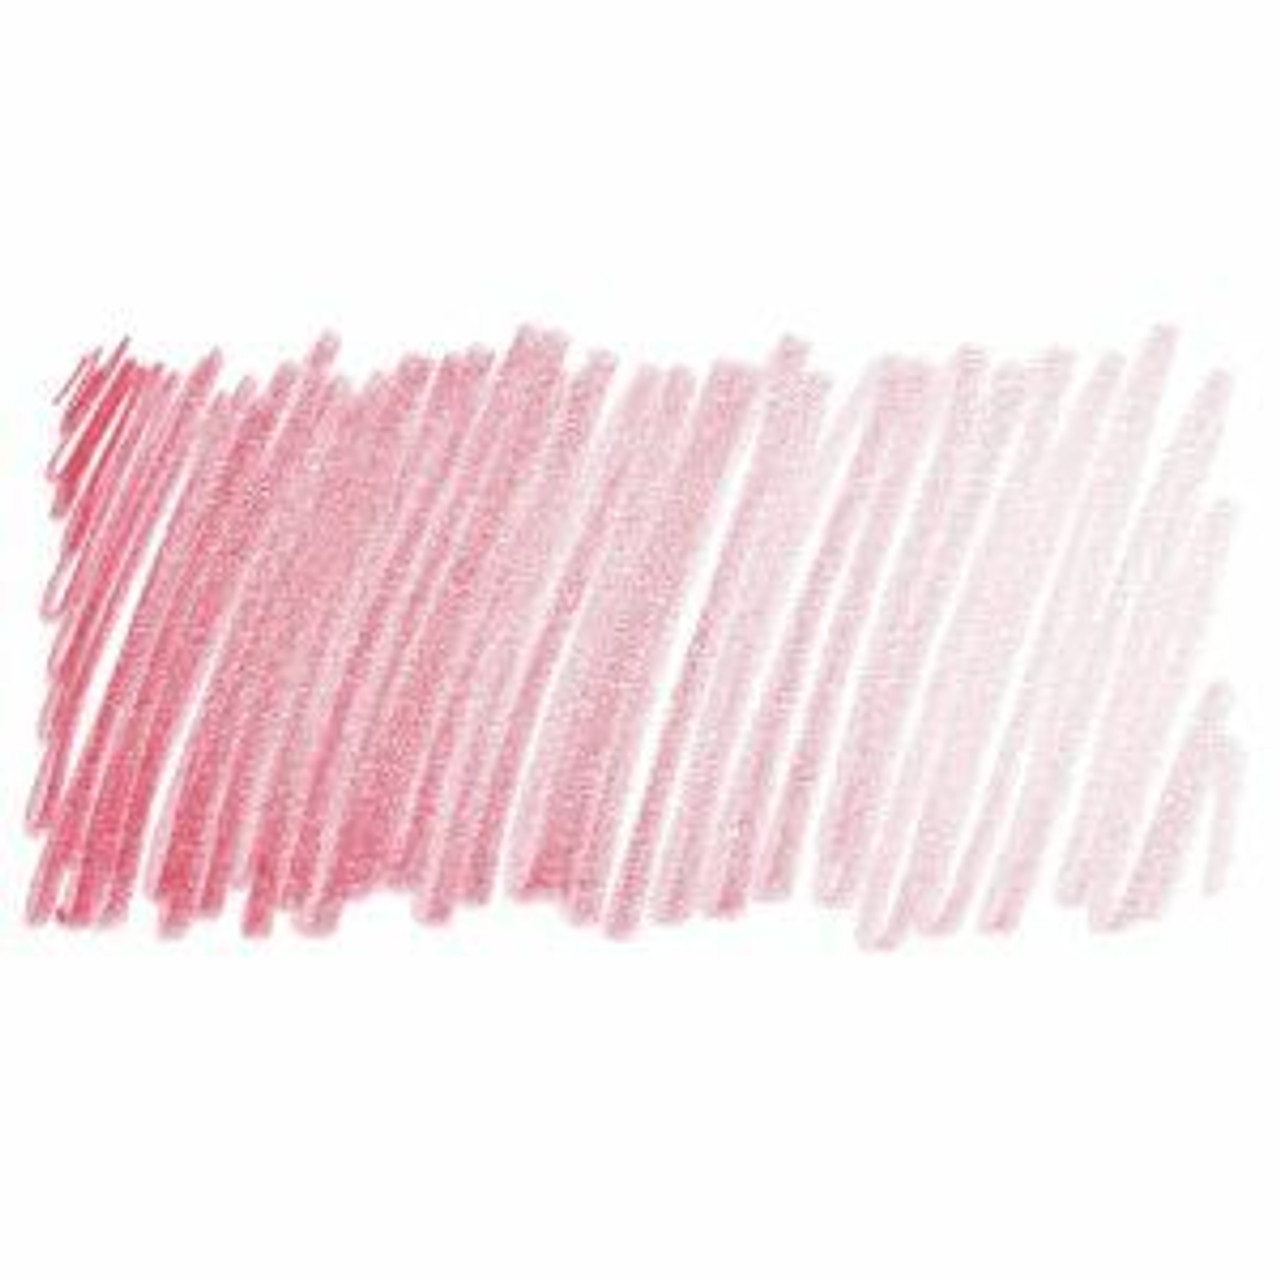 Col-Erase Colored Pencil, Carmine Red - Sam Flax Atlanta